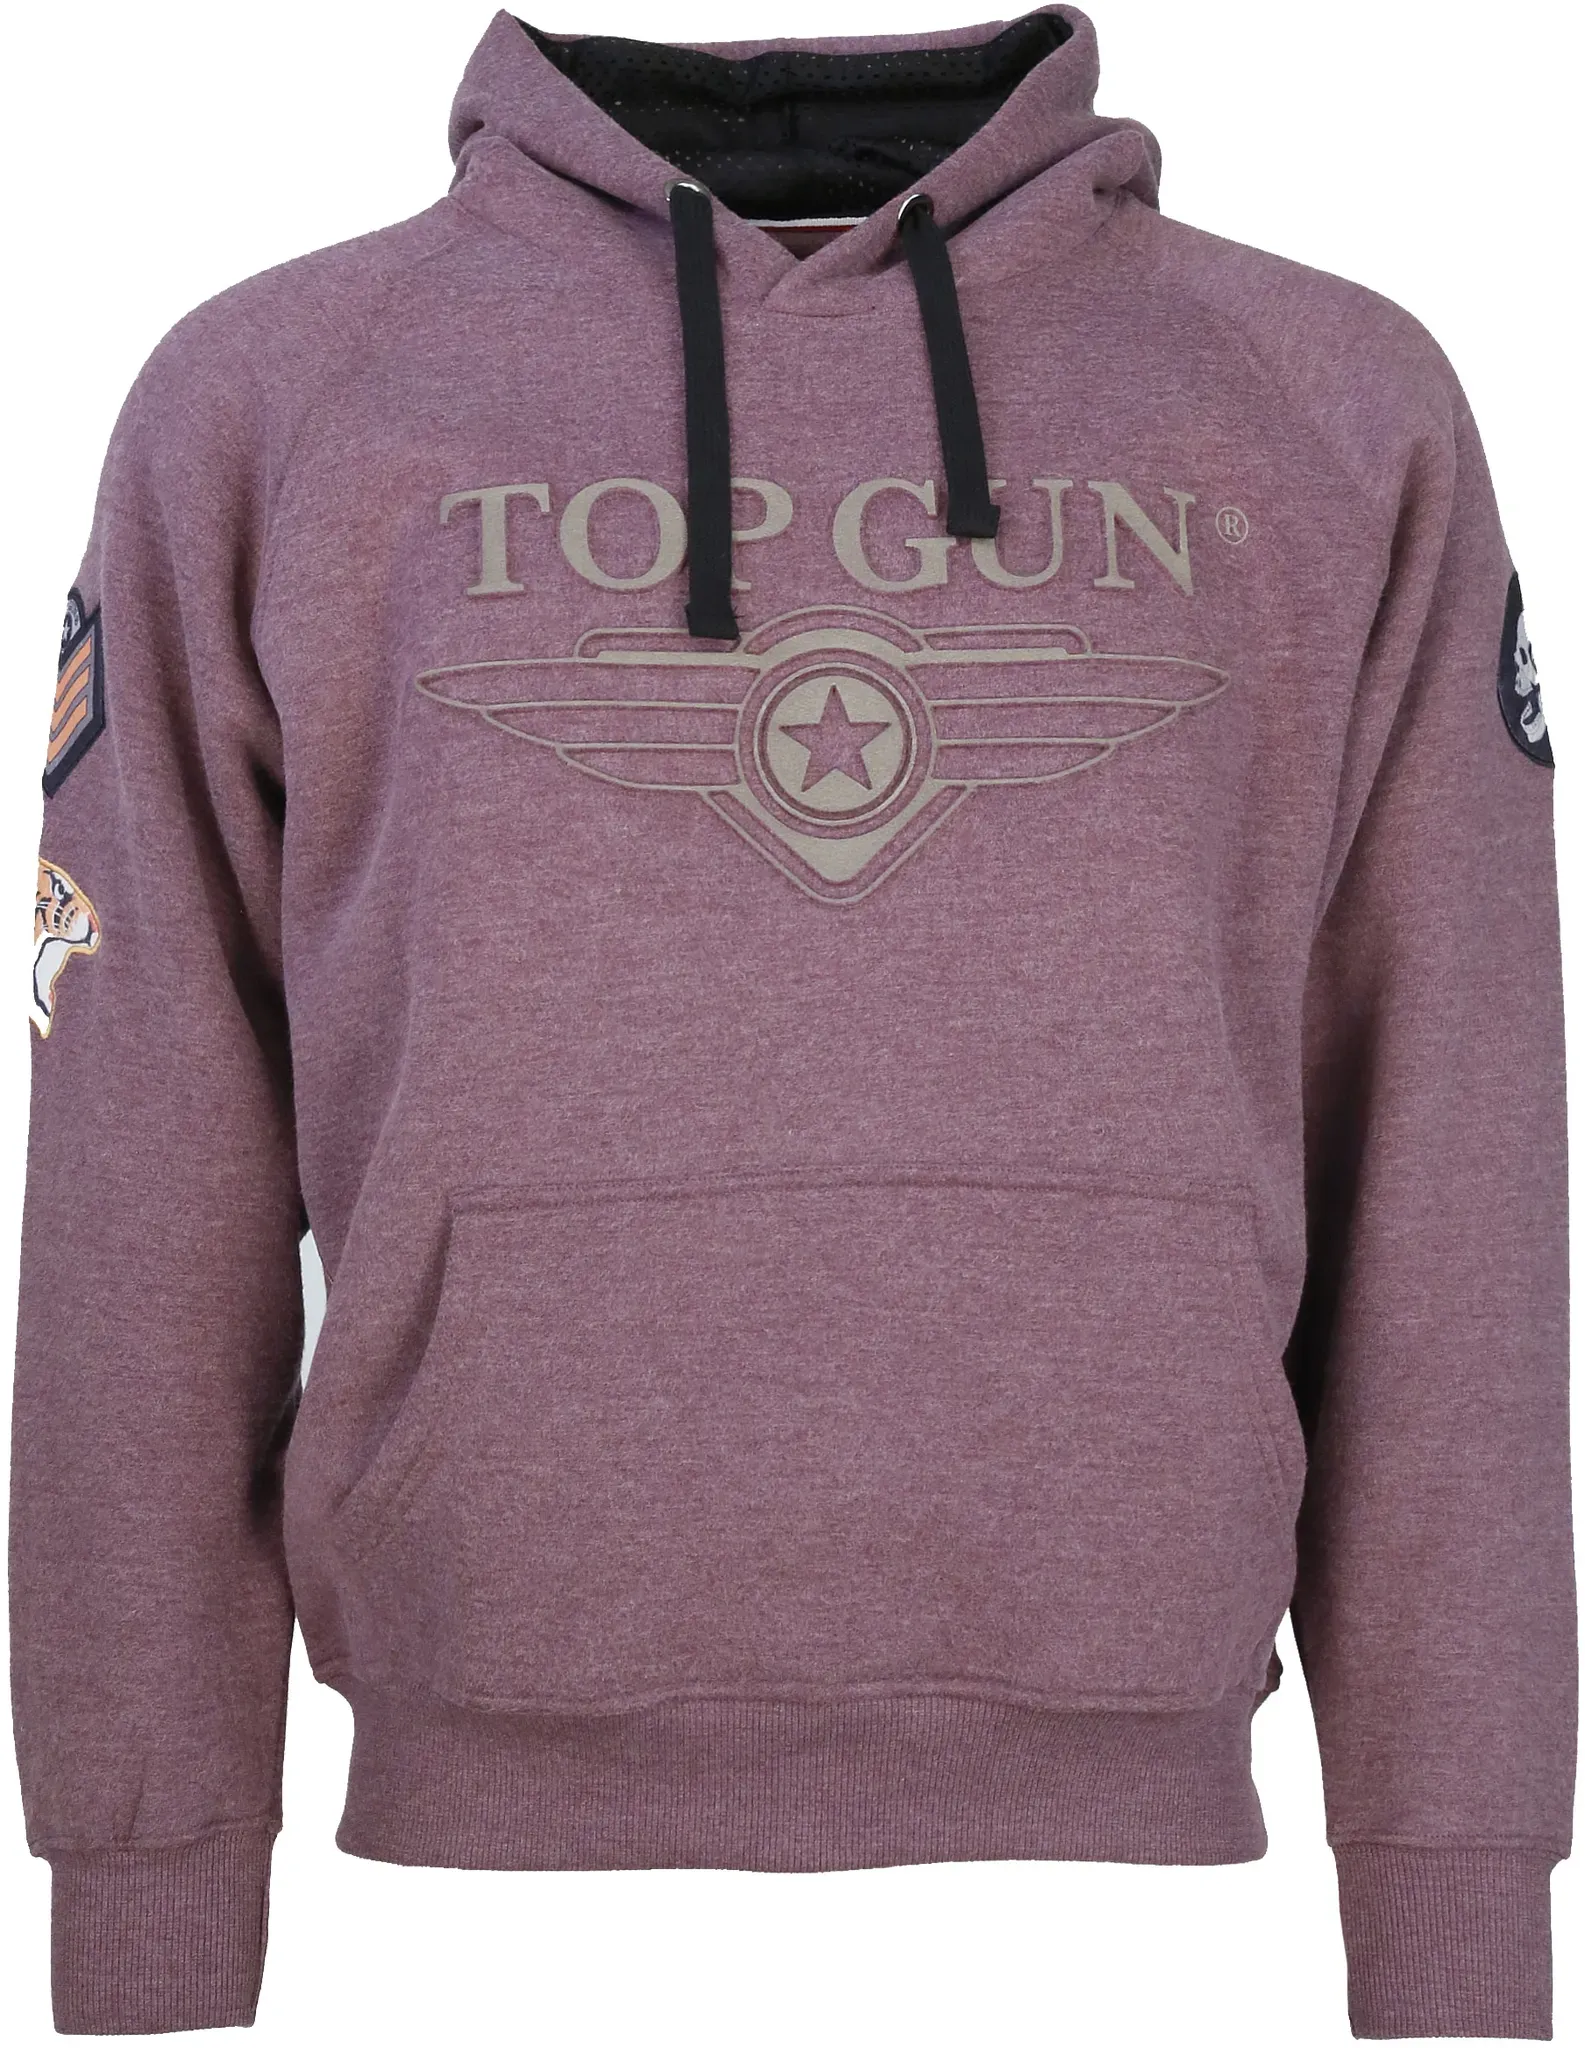 Kapuzenpullover TOP GUN "Simulator TG20191025" Gr. 48 (S), rot (bordeau) Herren Pullover Hoodie Sweatshirt Sweatshirts